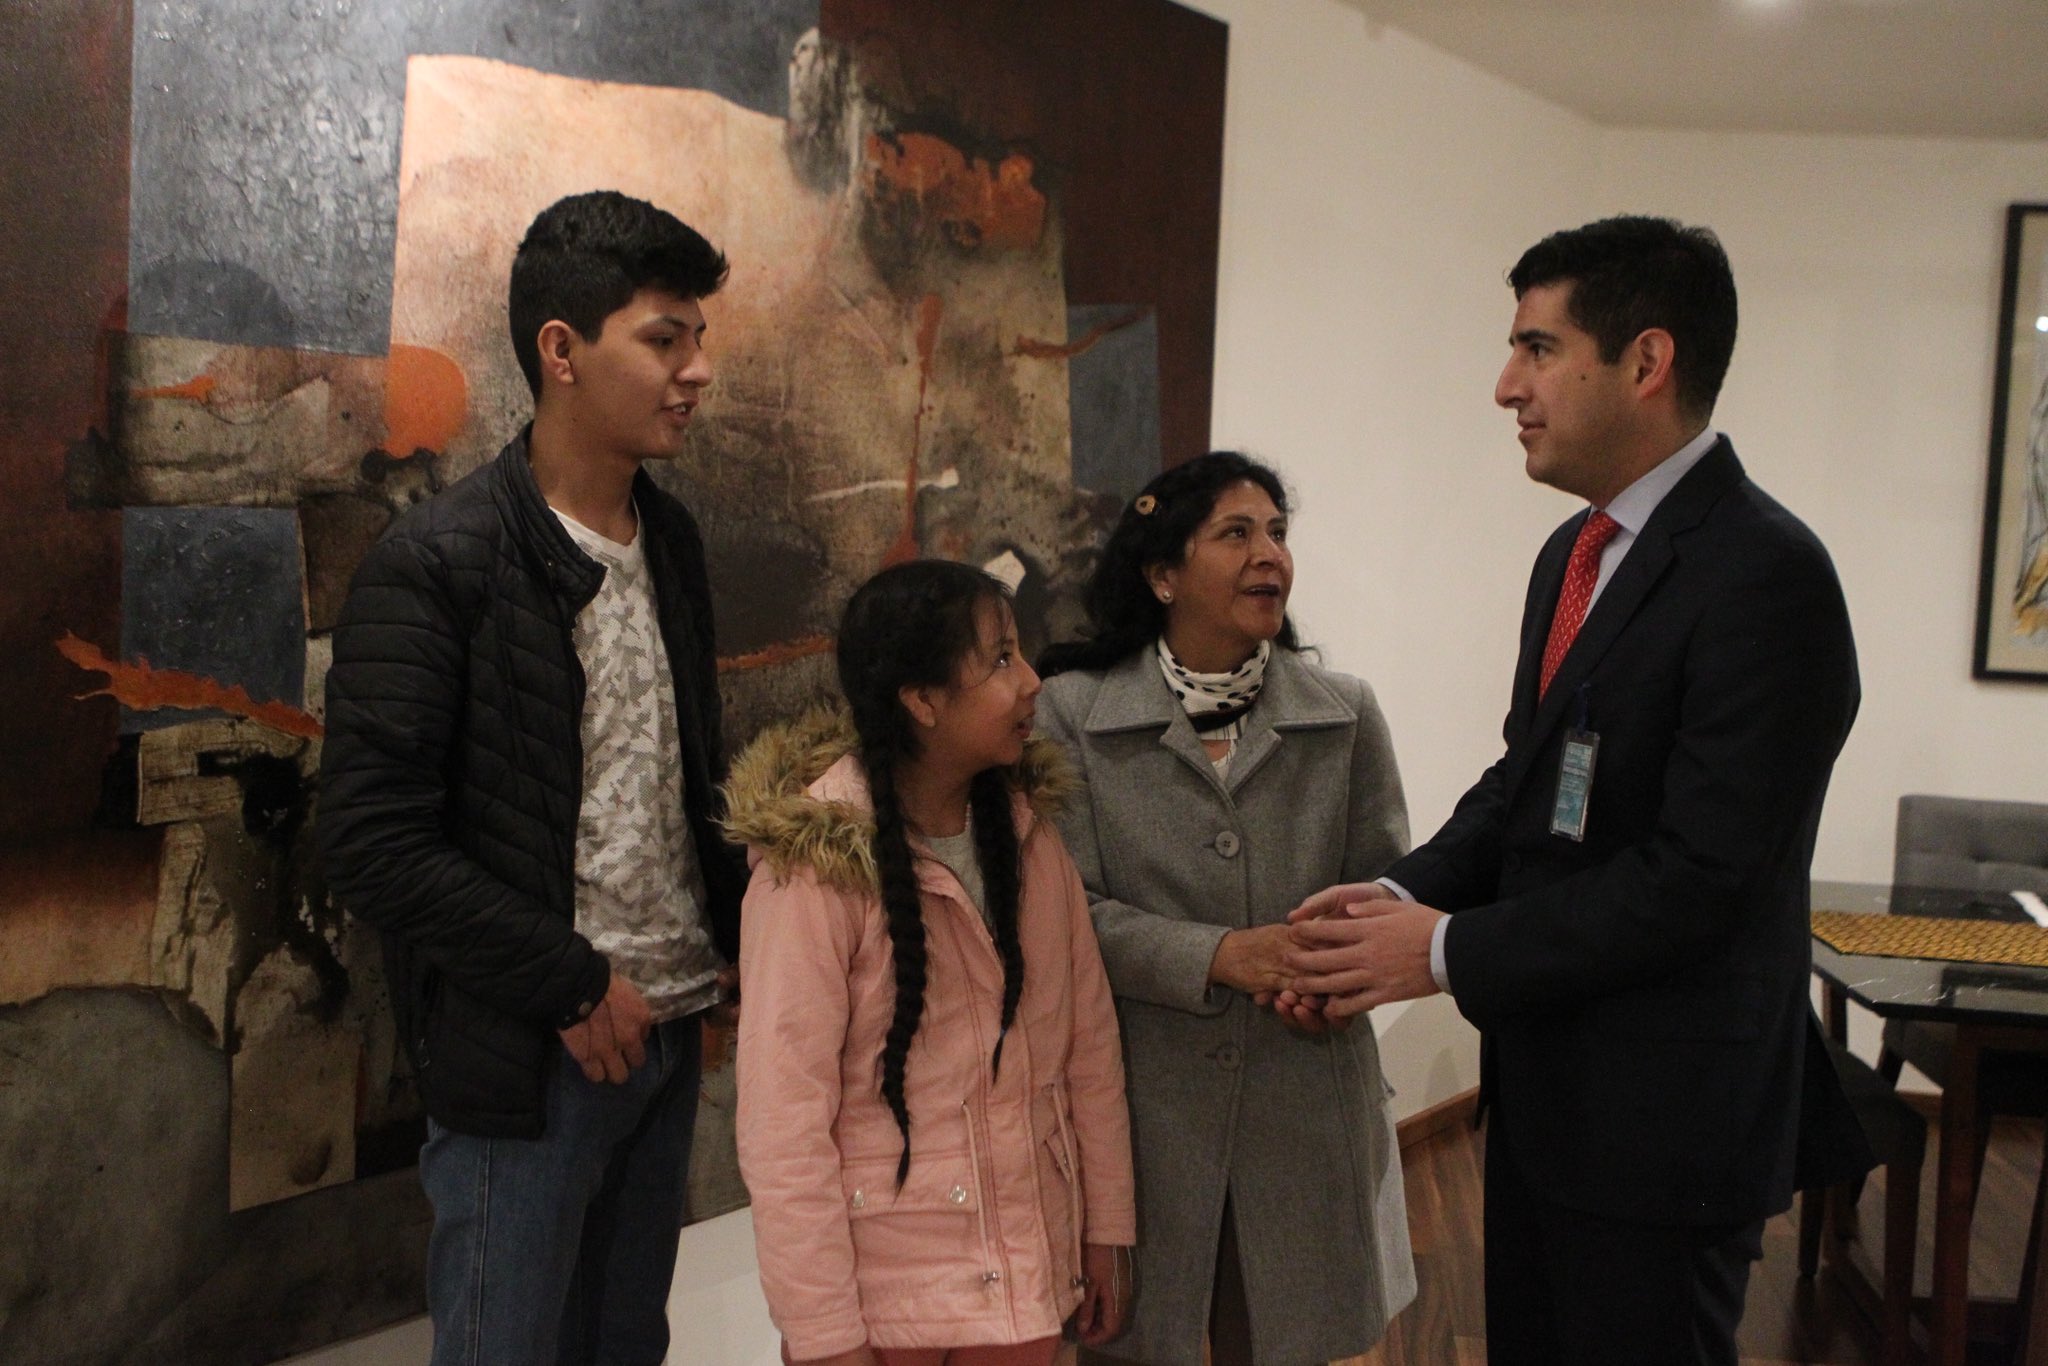 Familia de Pedro Castillo junto a embajador expulsado llegaron a México para recibir asilo político